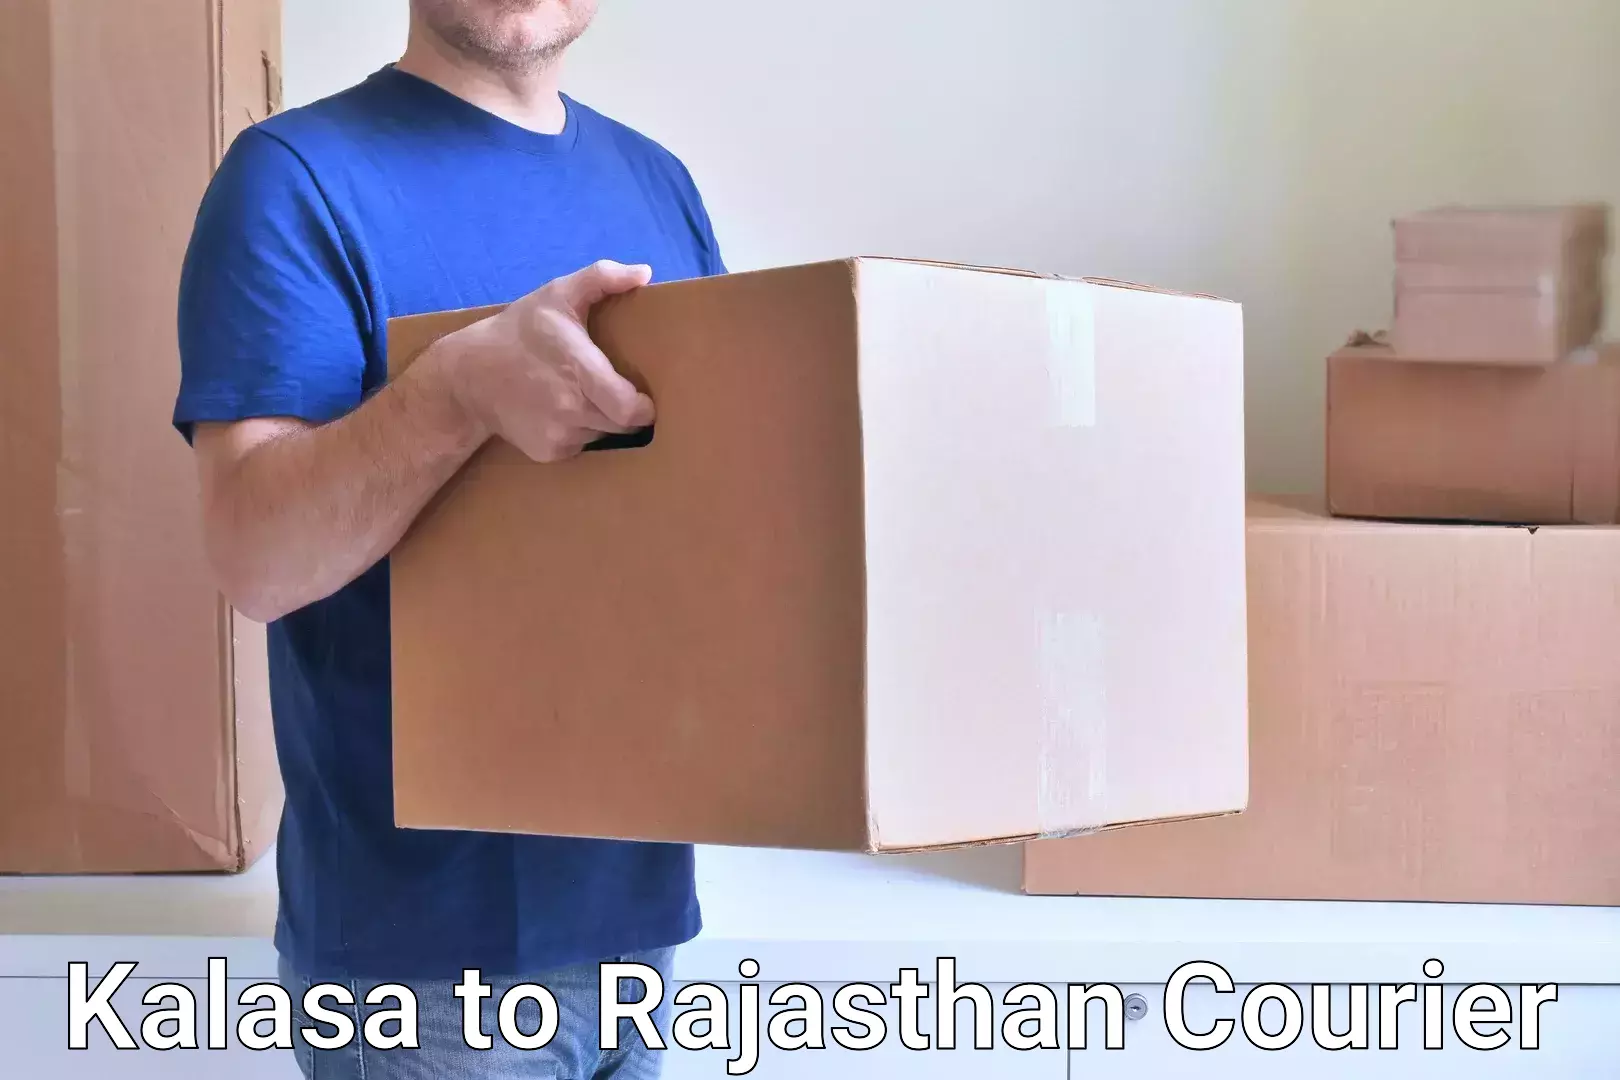 Courier service comparison Kalasa to Tijara